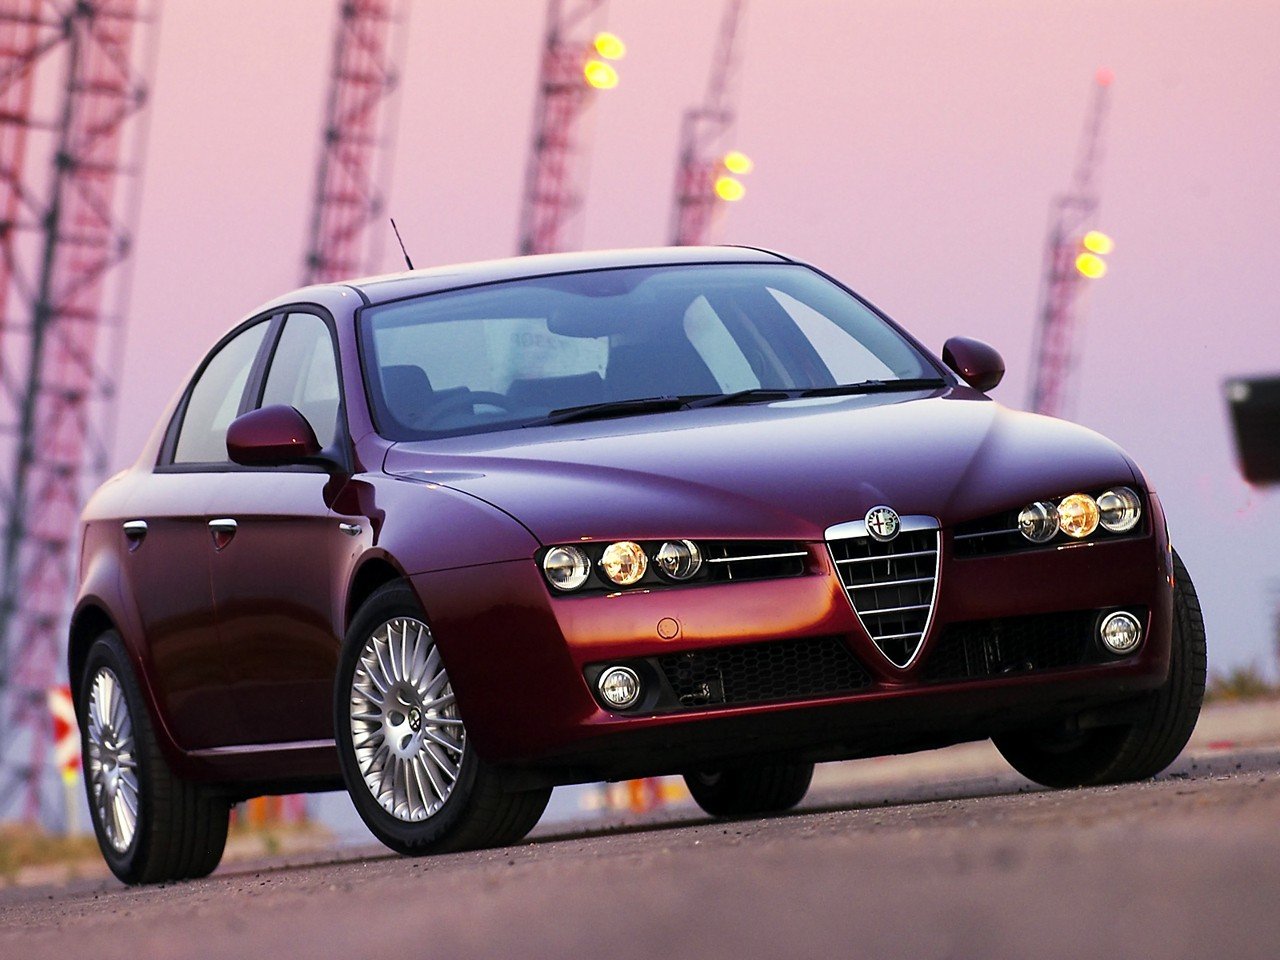 Cada alfa romeo купить. Alfa Romeo. Alfa Romeo 159 3.2. Автомобиль Альфа Ромео 159. Alfa Romeo 159, 3.2 JTS.